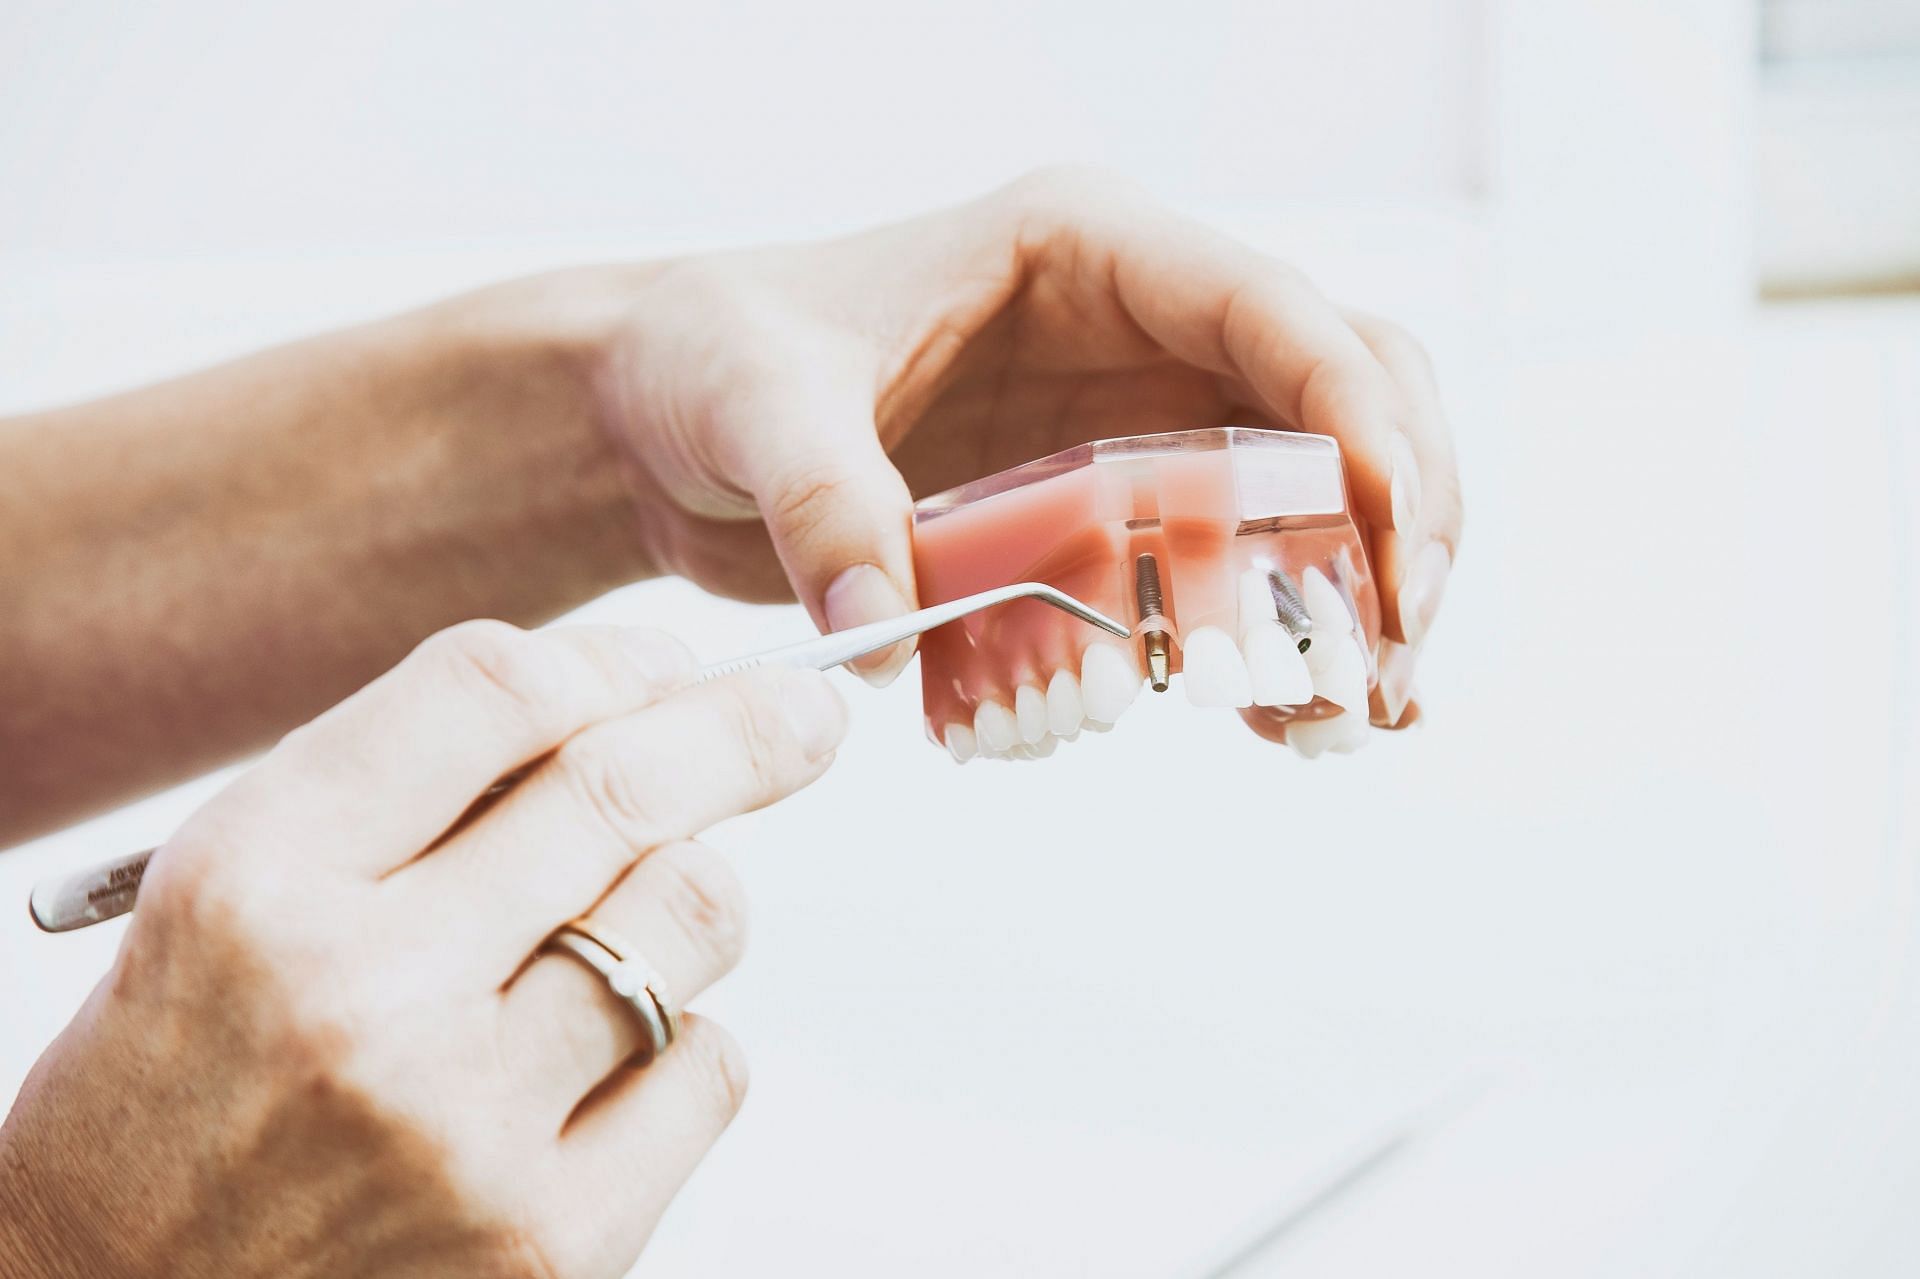 Imperfect dentures may also cause bleeding gums. (Image via Unsplash/ Peter Kasprzyk)